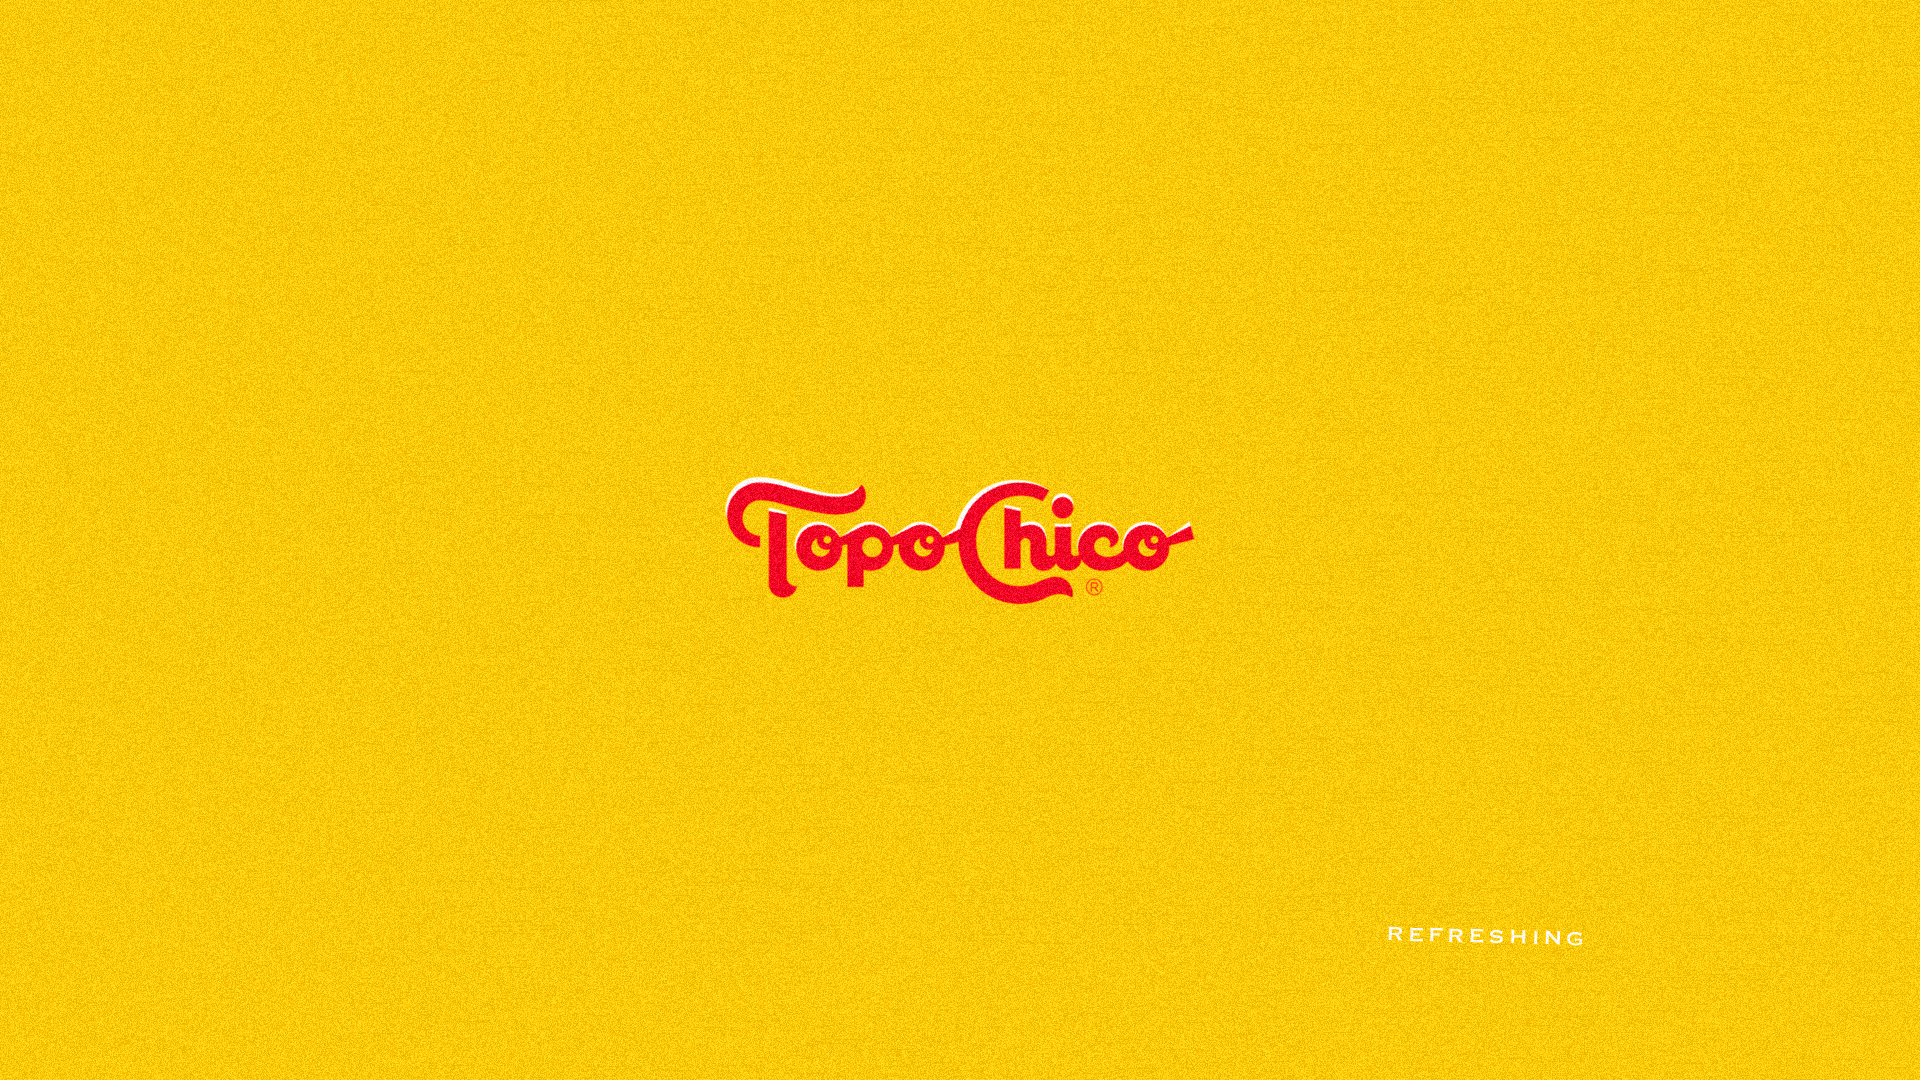 Topography Topochico 1920x1080